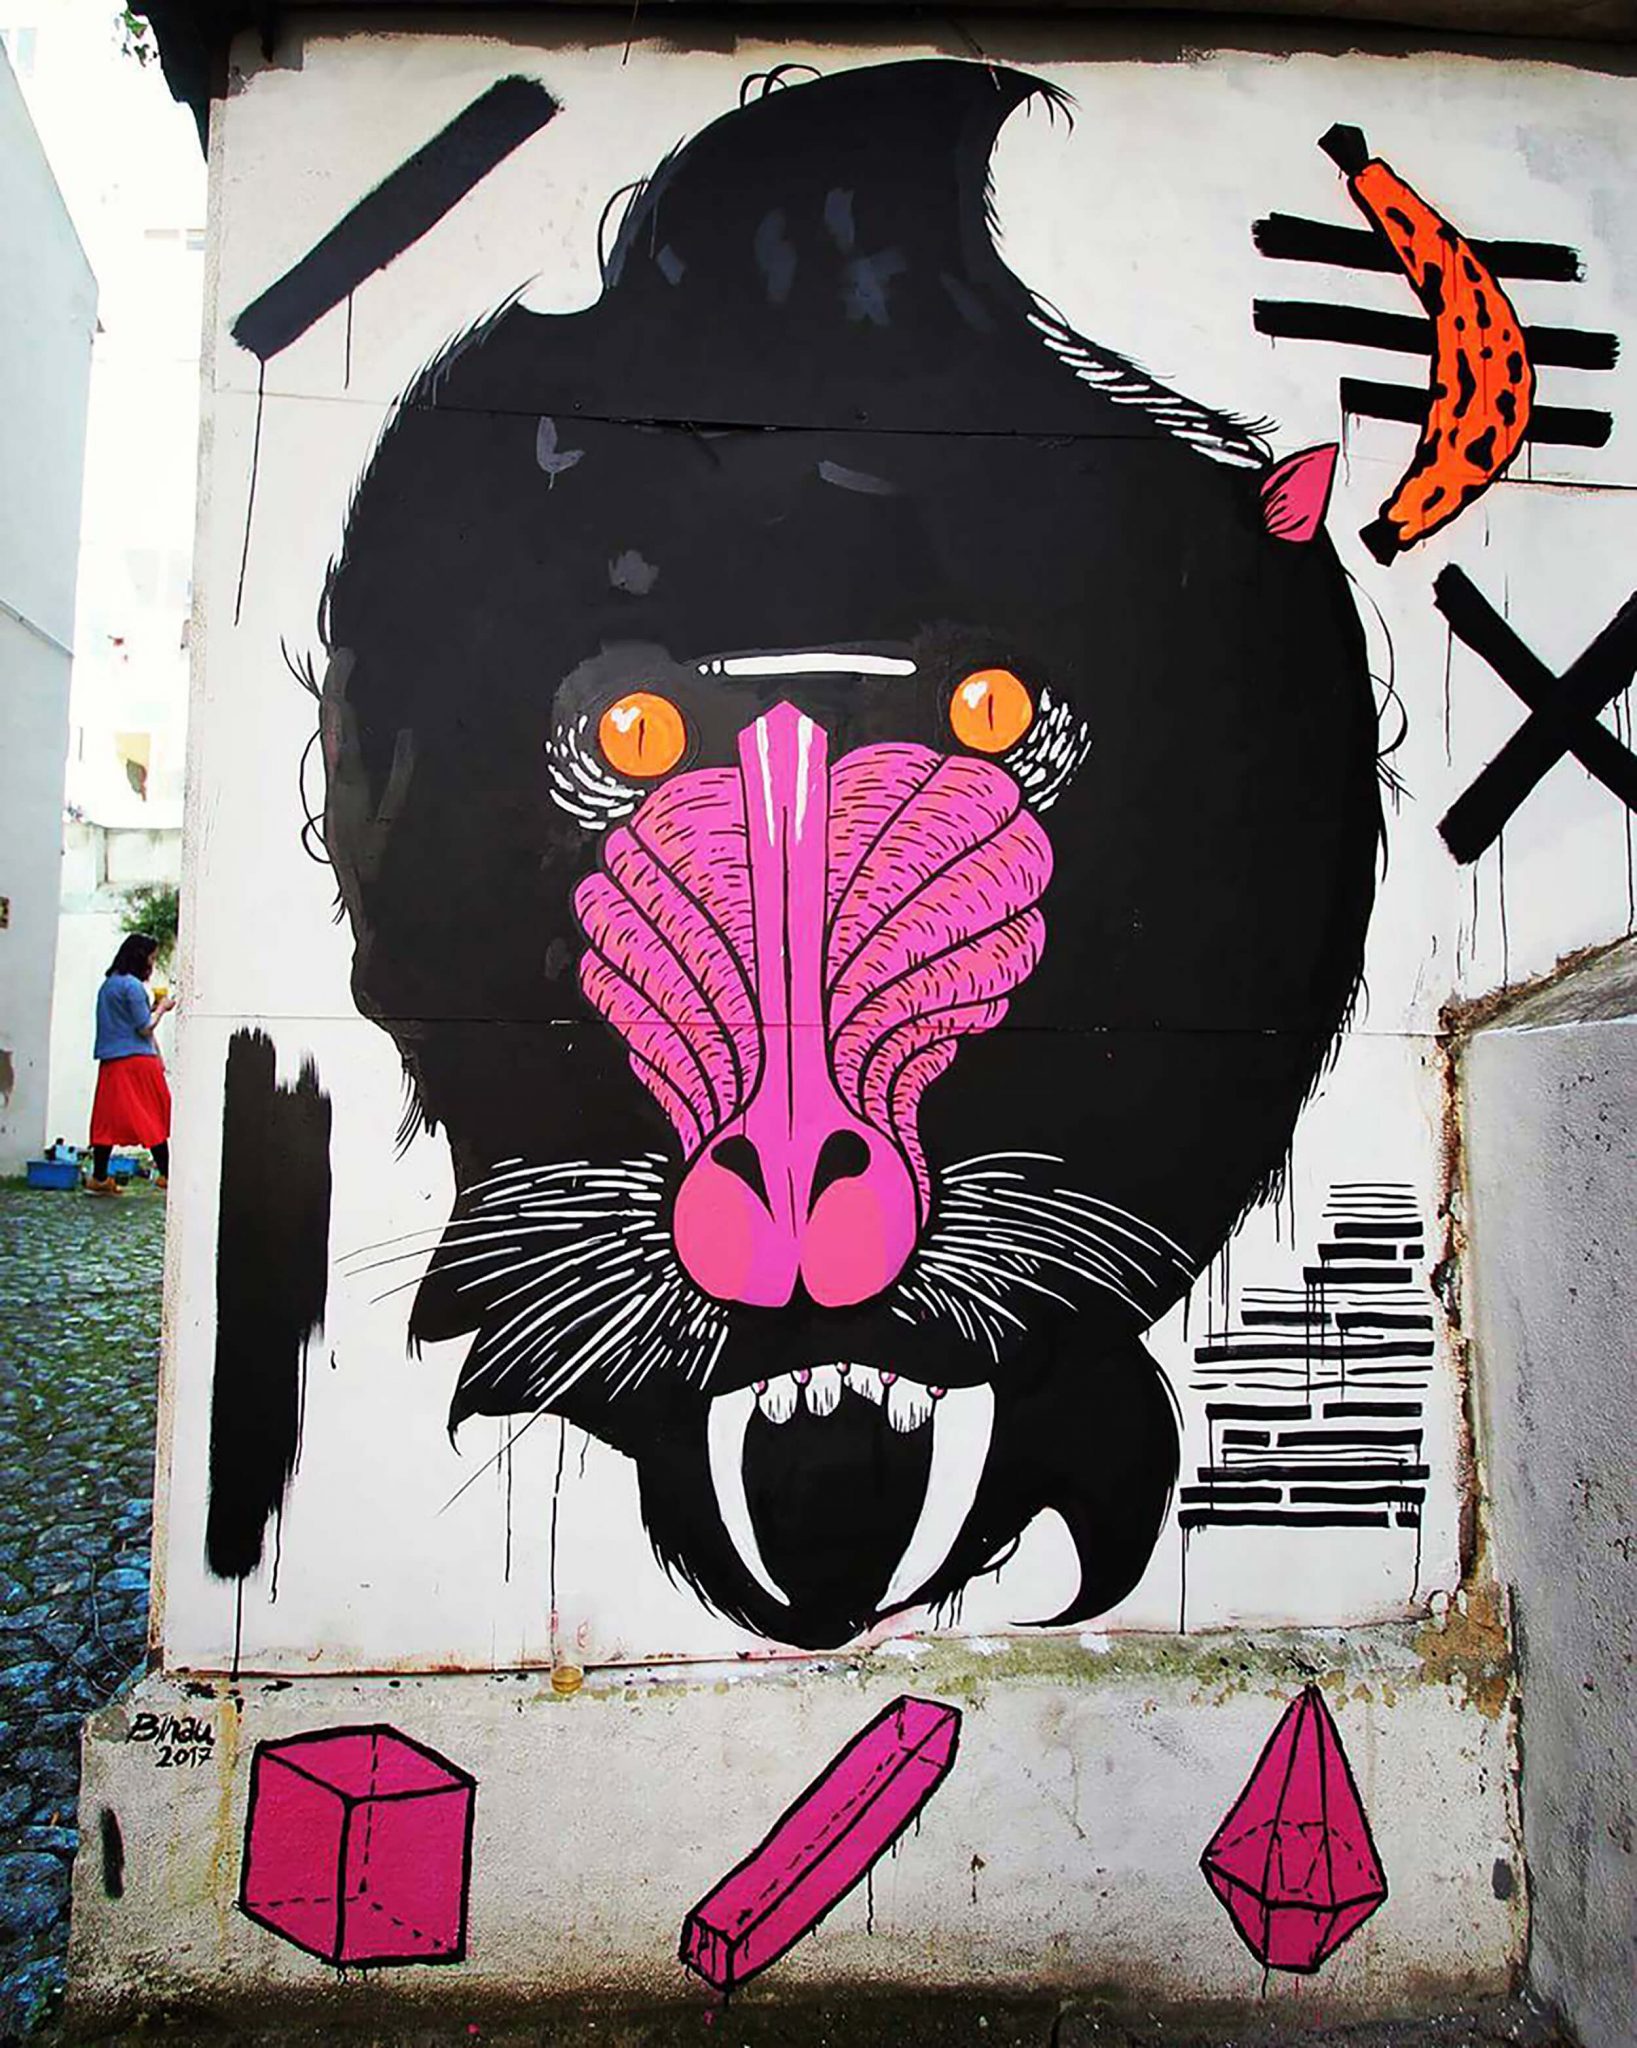 BINAU Street Art Mural "Baboon"